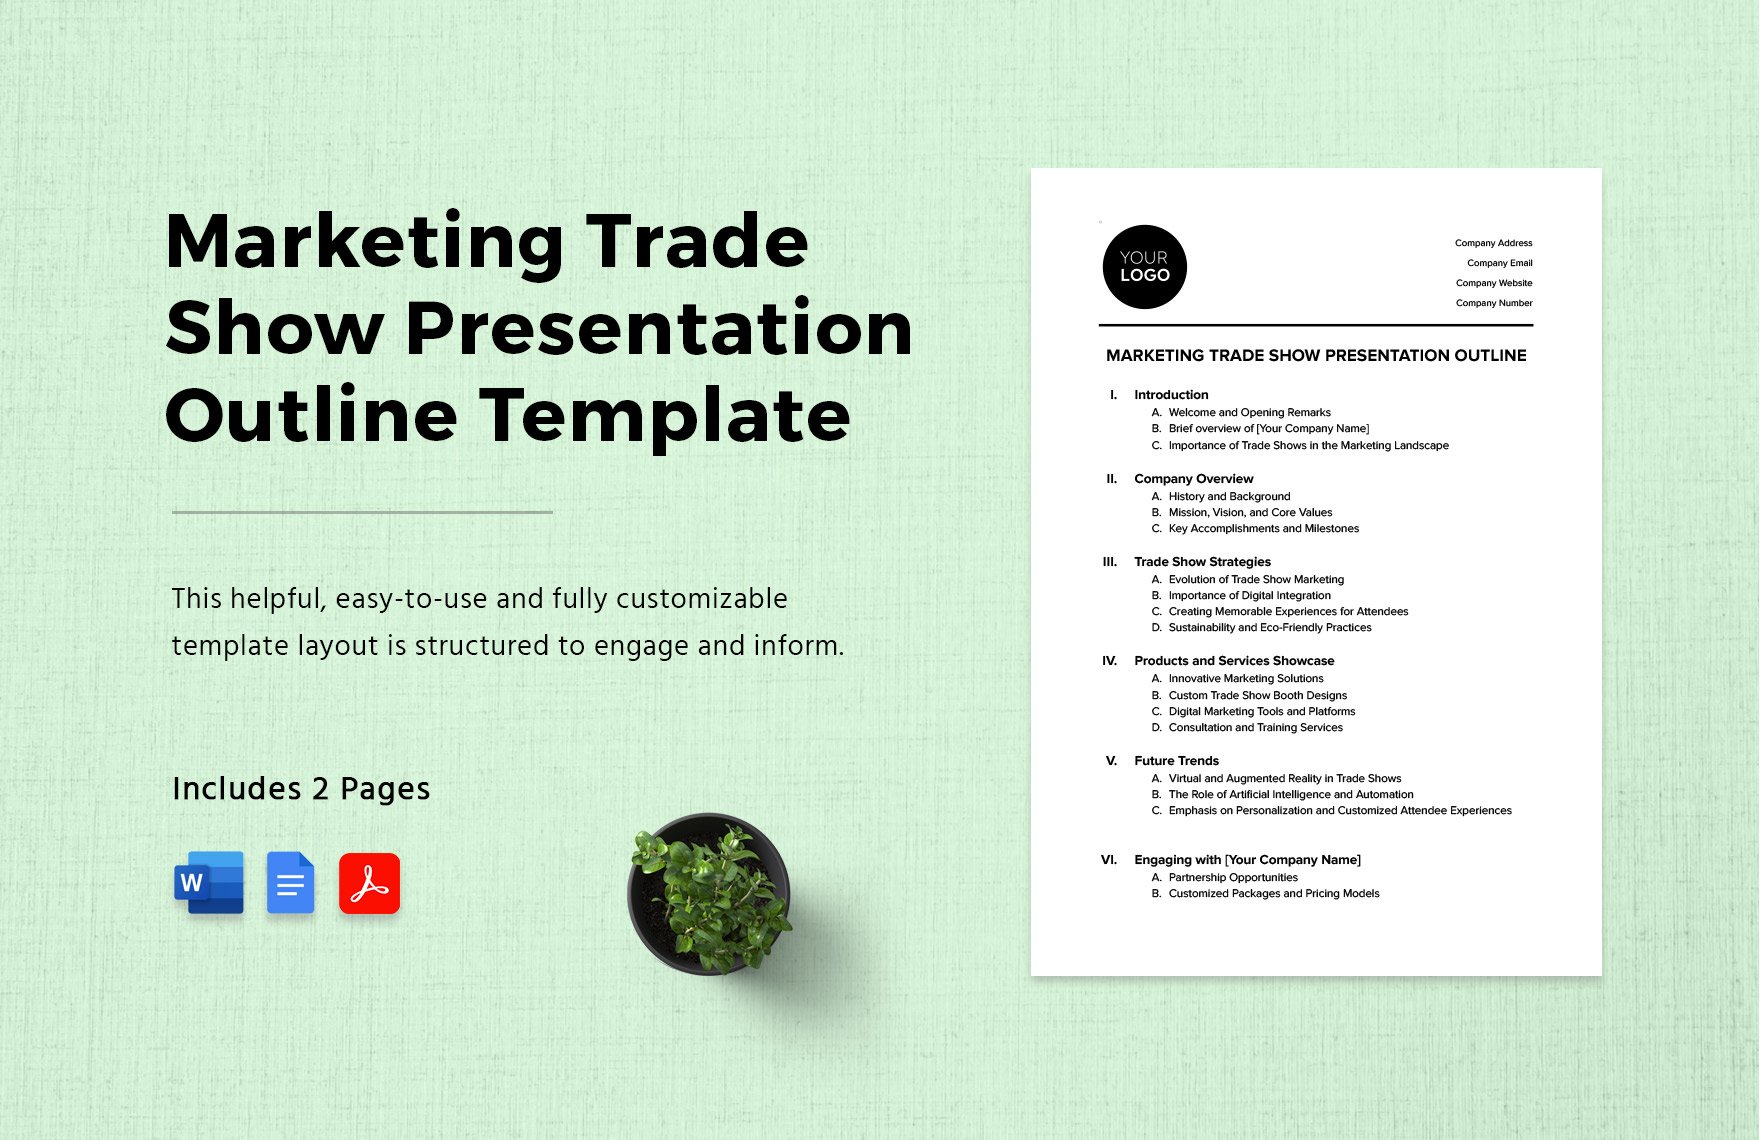 Marketing Trade Show Presentation Outline Template in Word, Google Docs, PDF